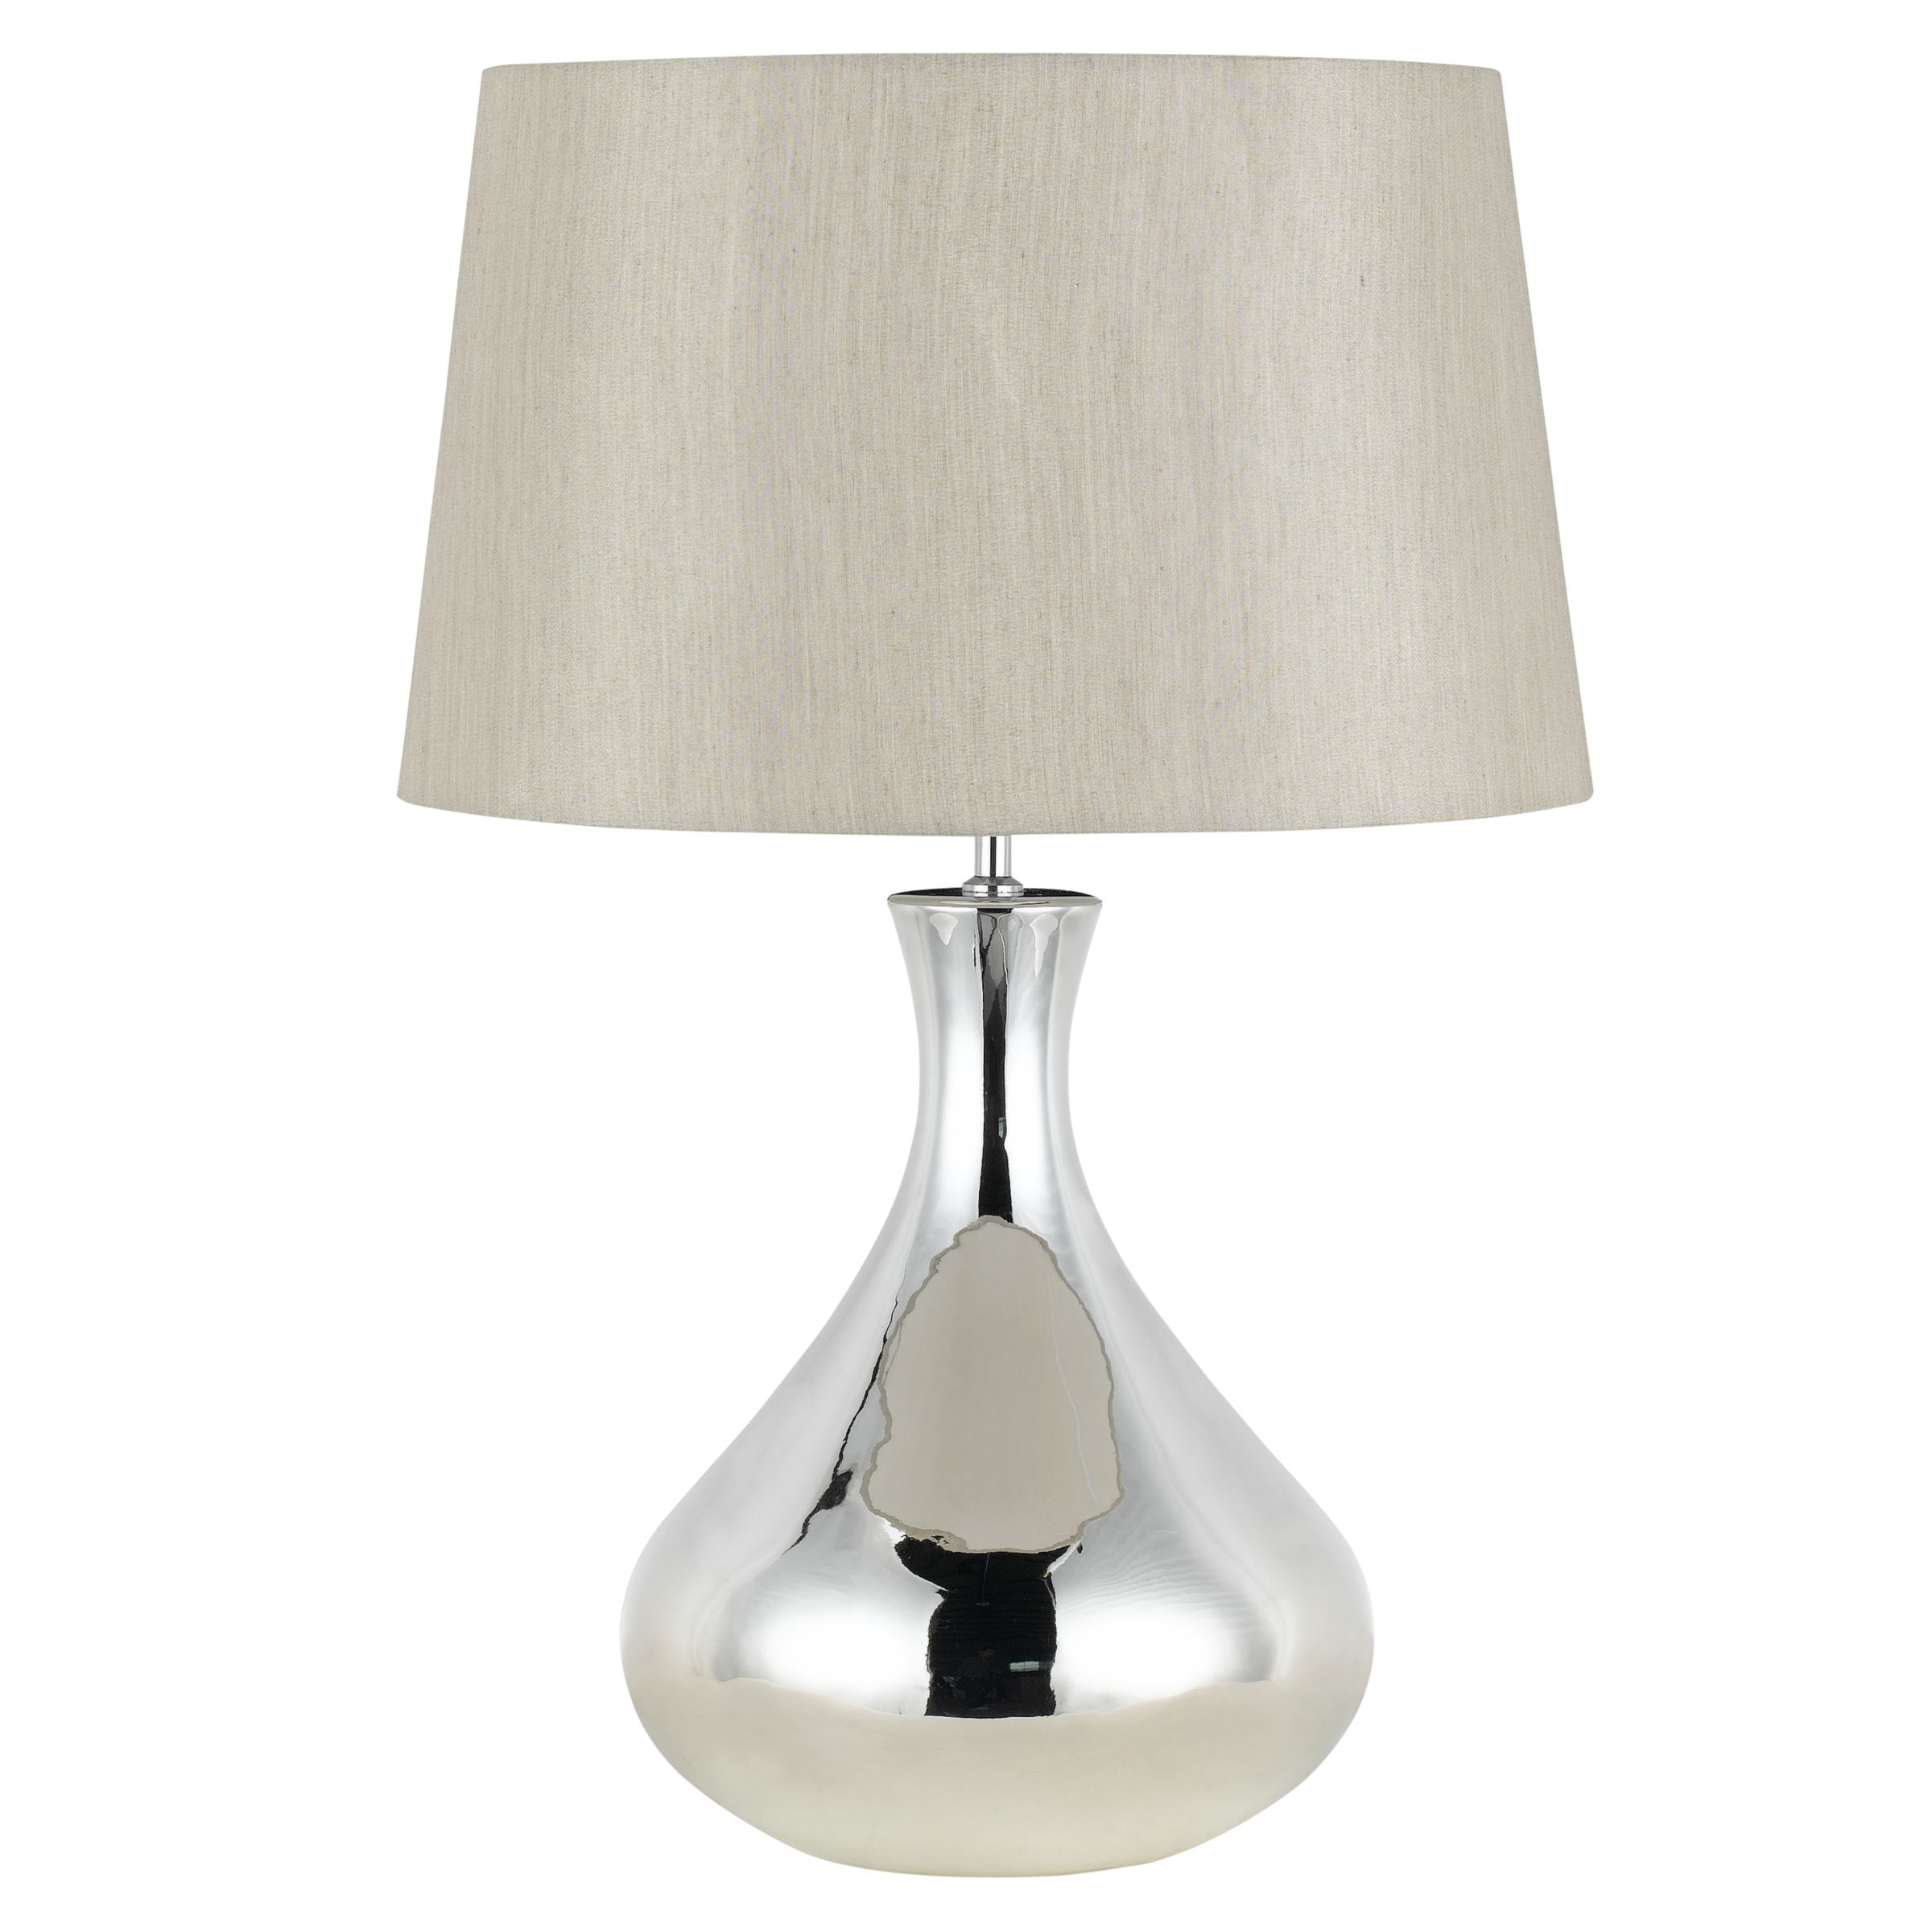 John Lewis Sonia Table Lamp